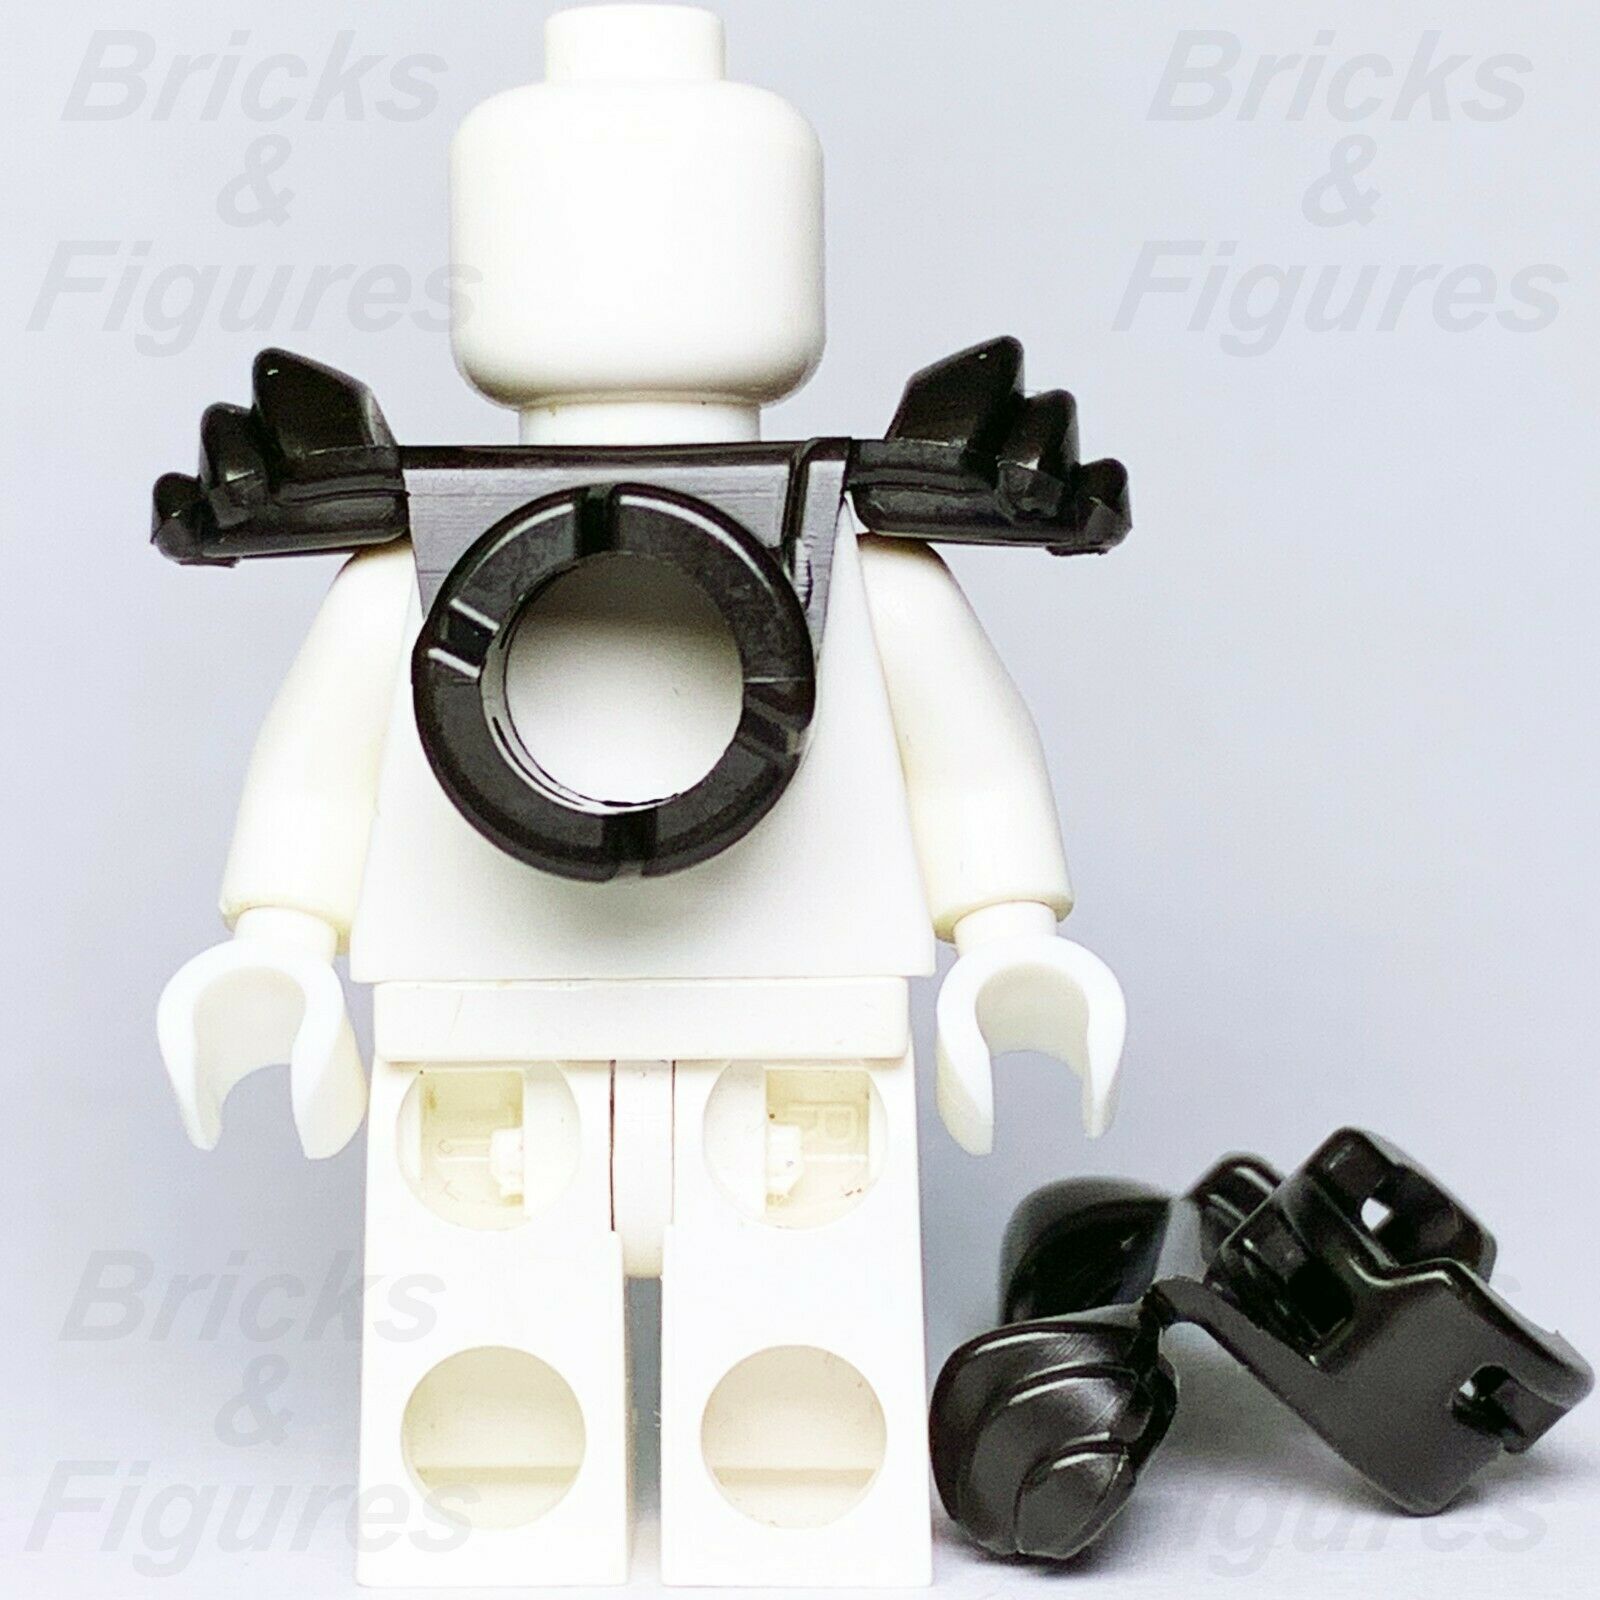 2 x Ninjago LEGO Black Ninja Shoulder Pads with Scabbard for two Katana Swords Part - Bricks & Figures